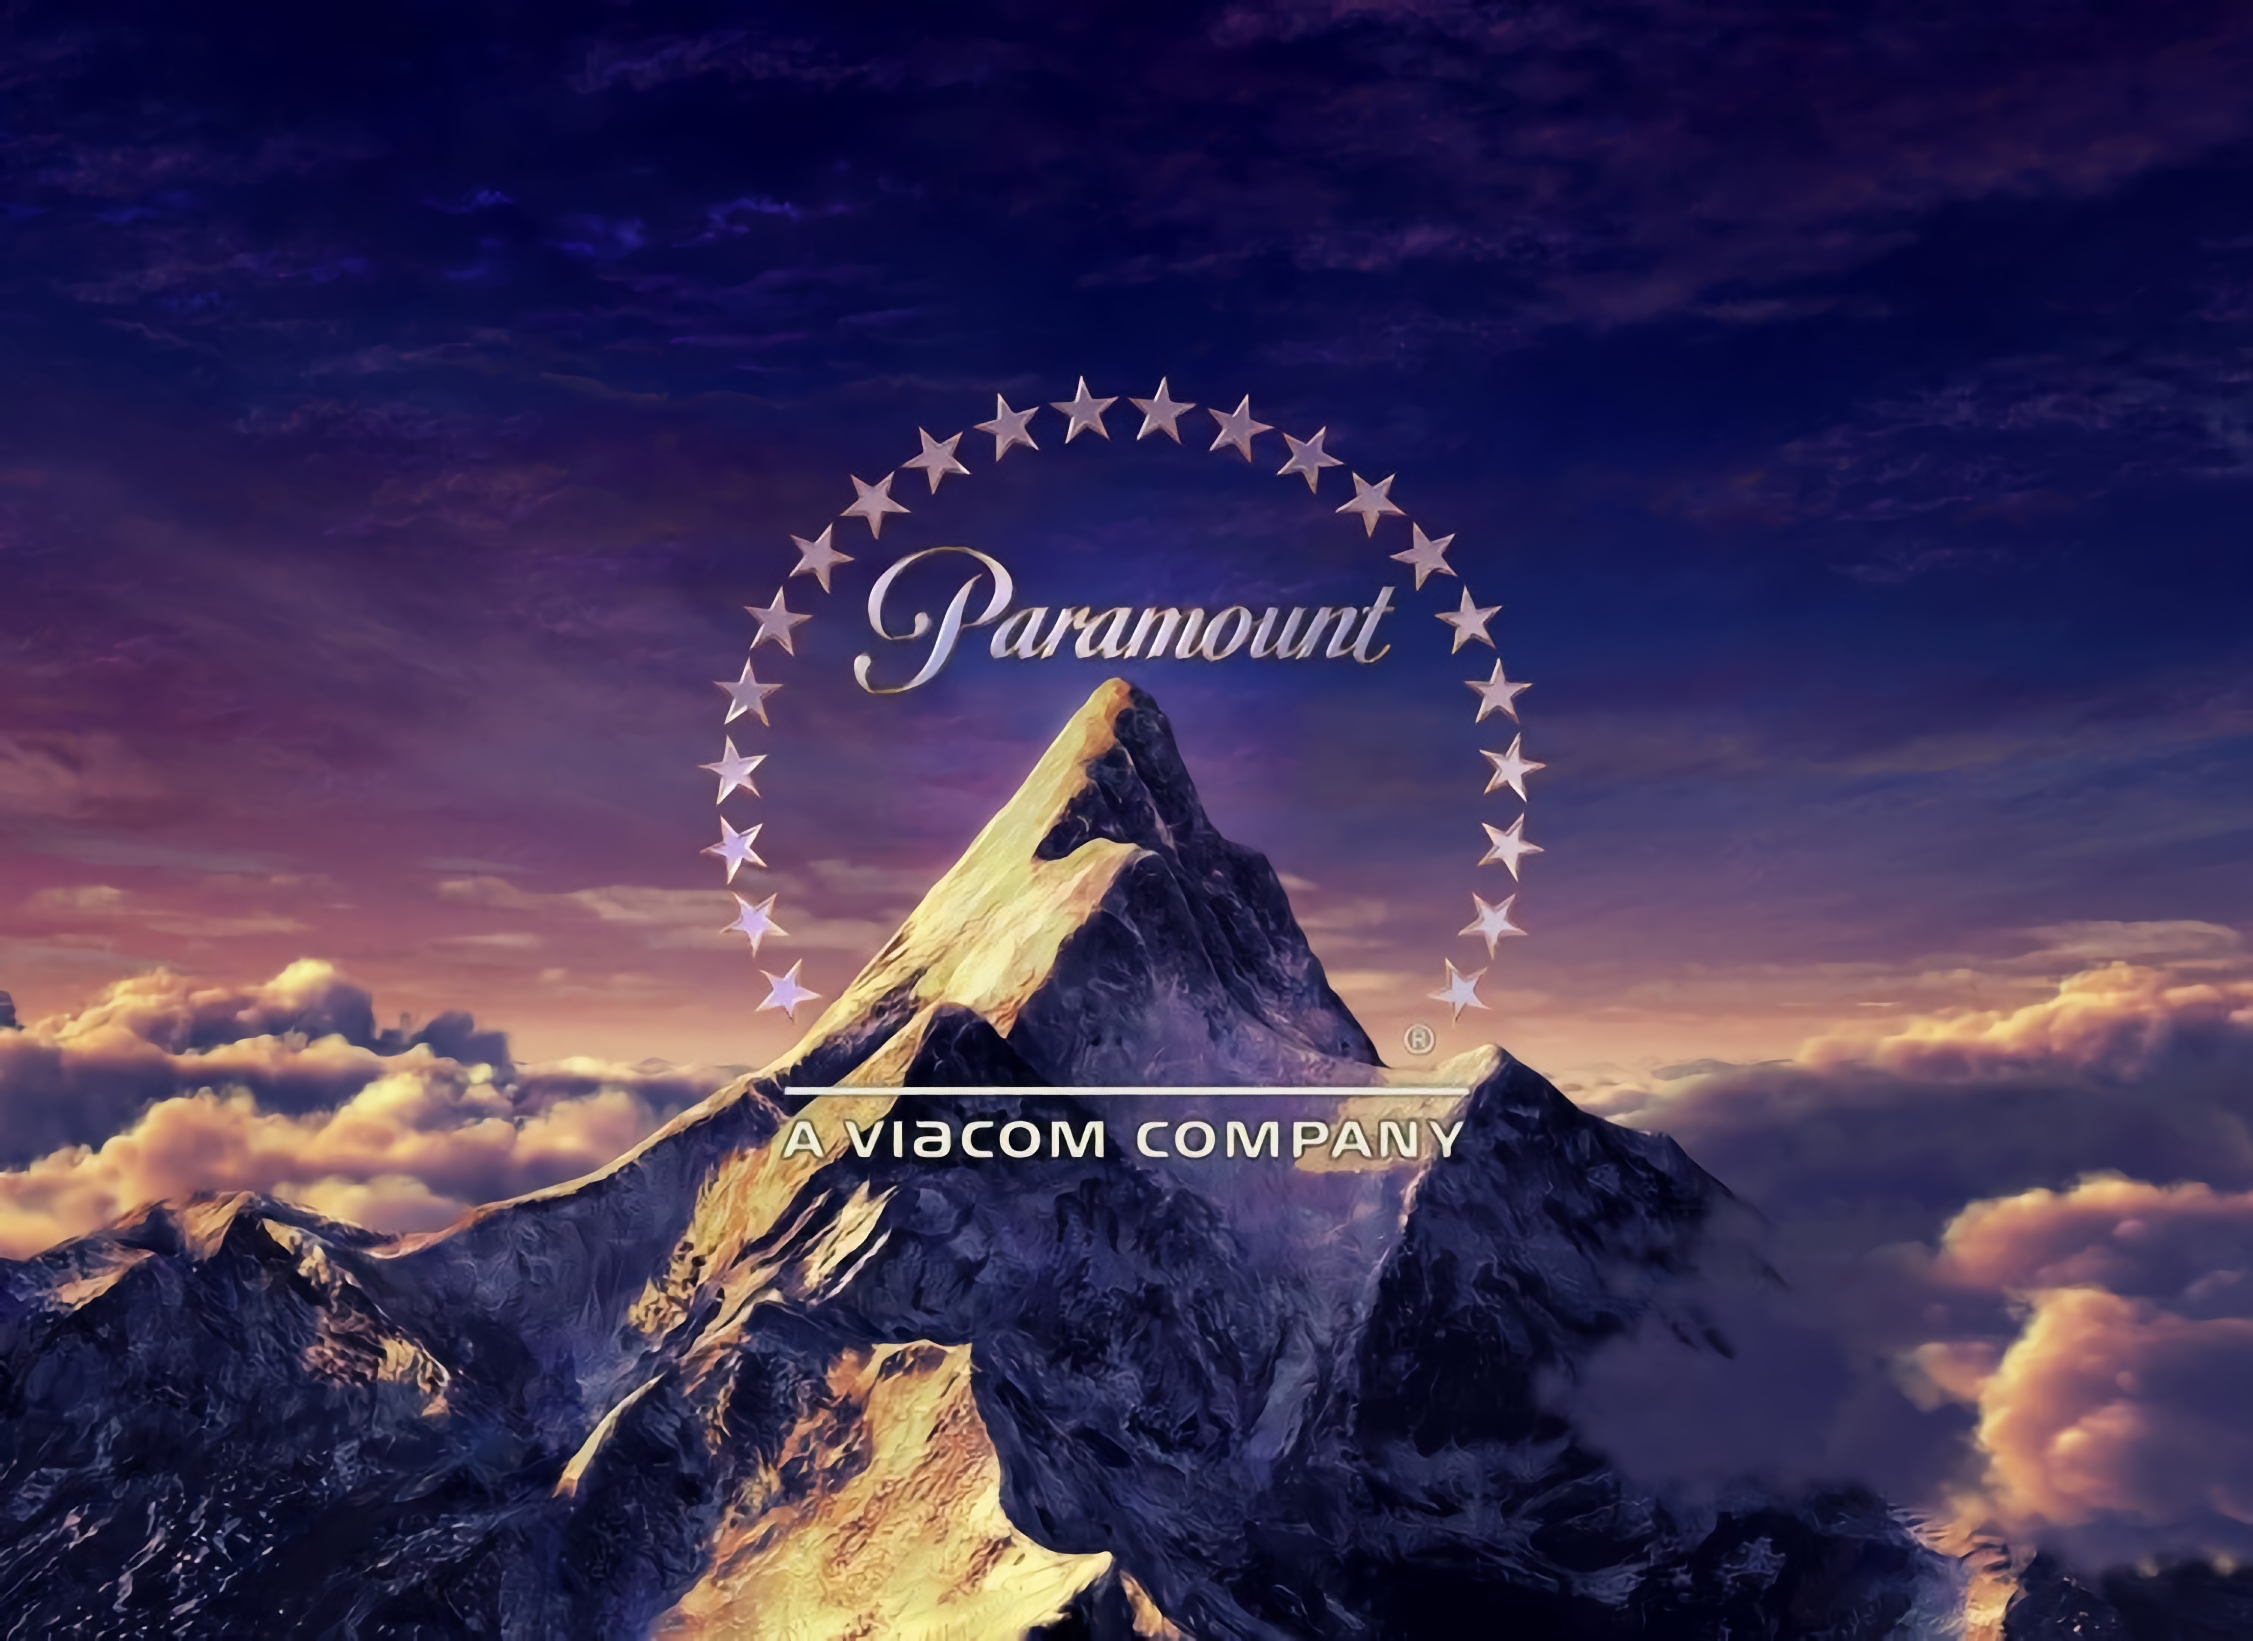 Paramount film studio stops work in Russia